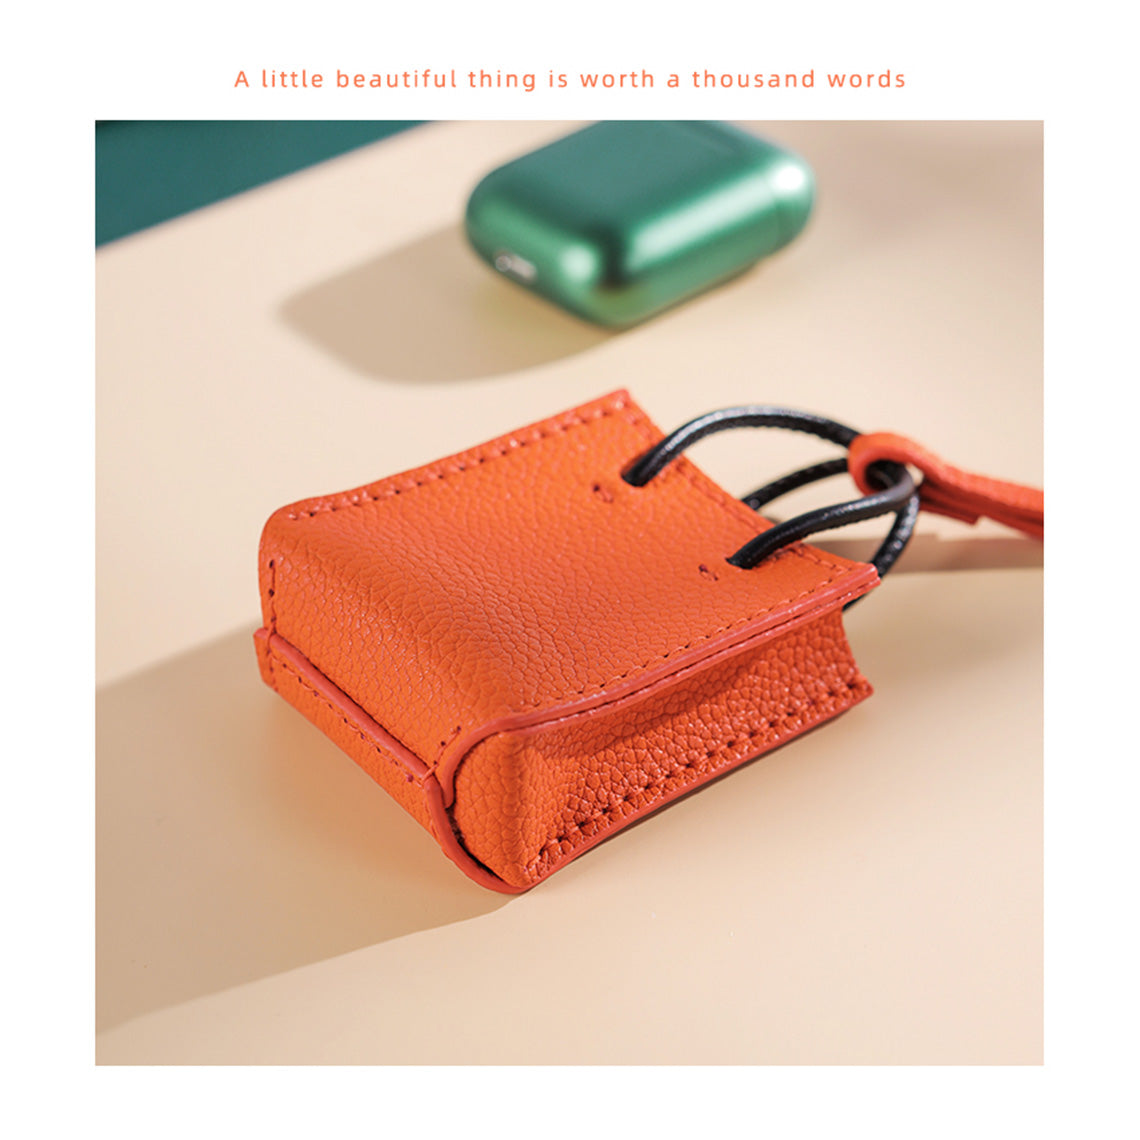 DIY inspired Hermes leather bag charm kit | Handmade purse charm